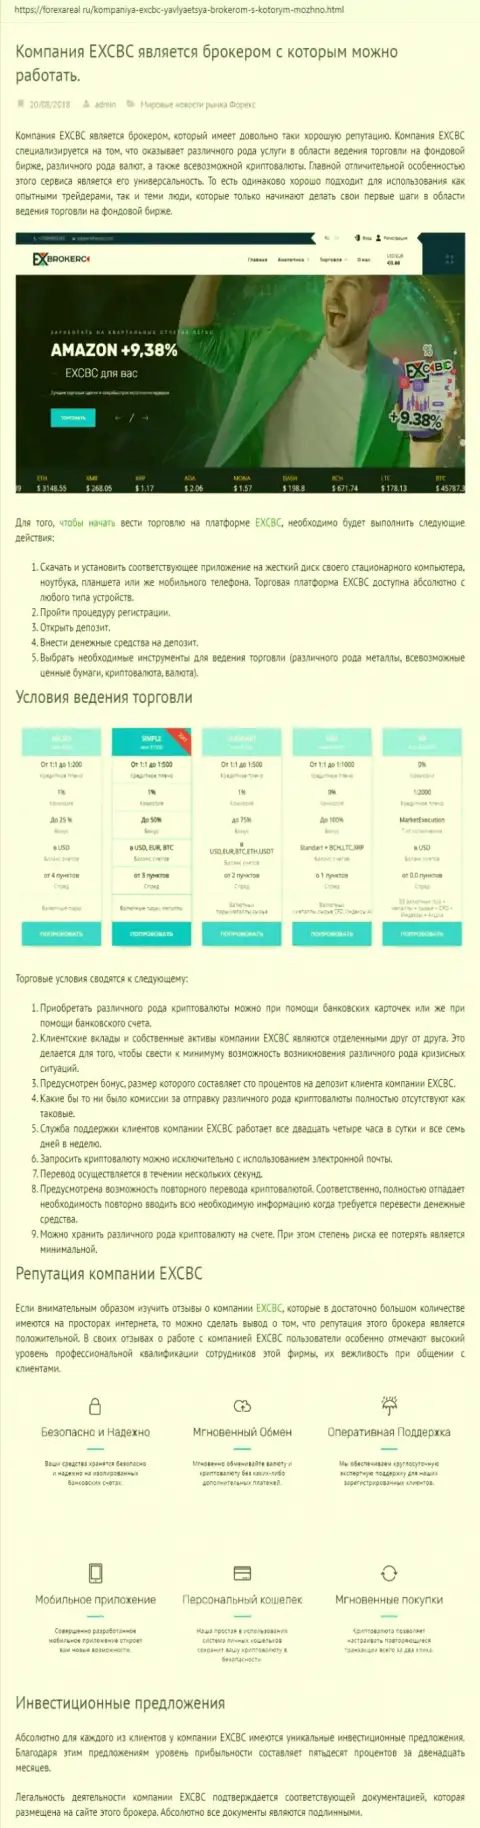 Веб-сайт forexAreal Ru разместил обзор форекс компании EXCBC